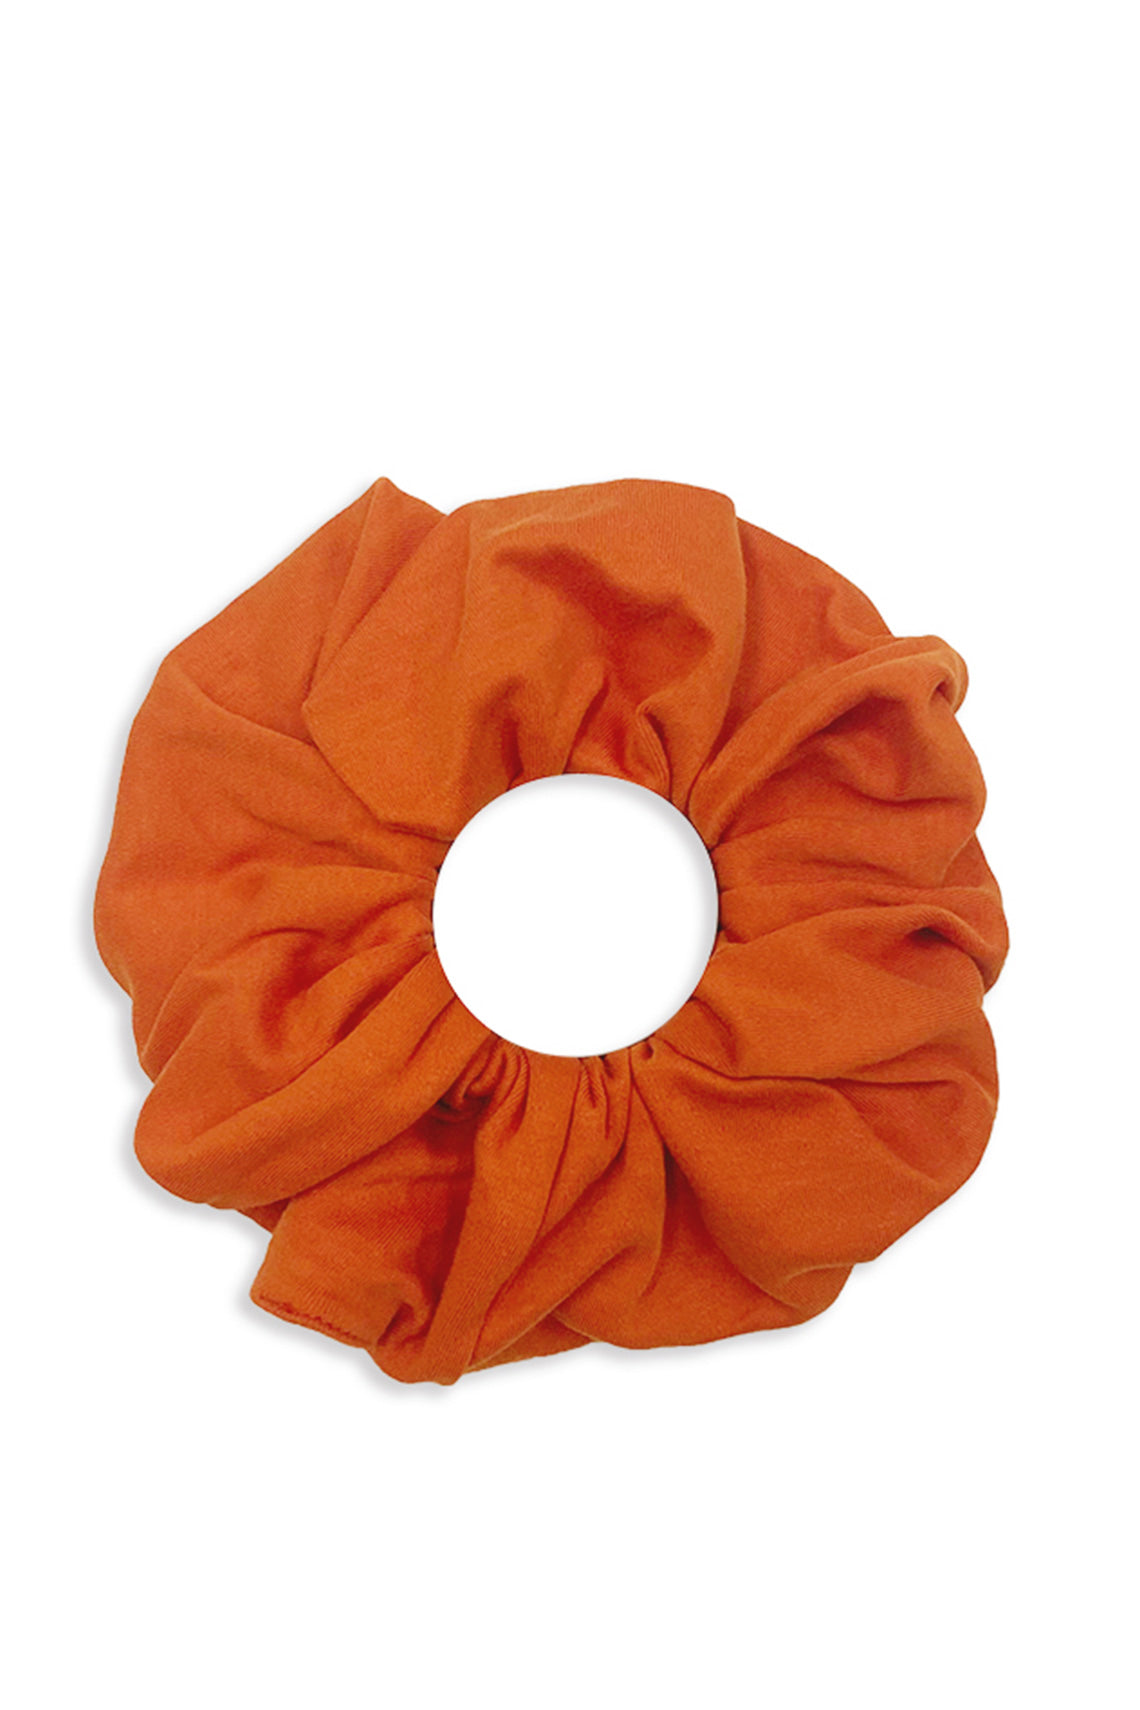 orange-color-scrunchie-1.jpg